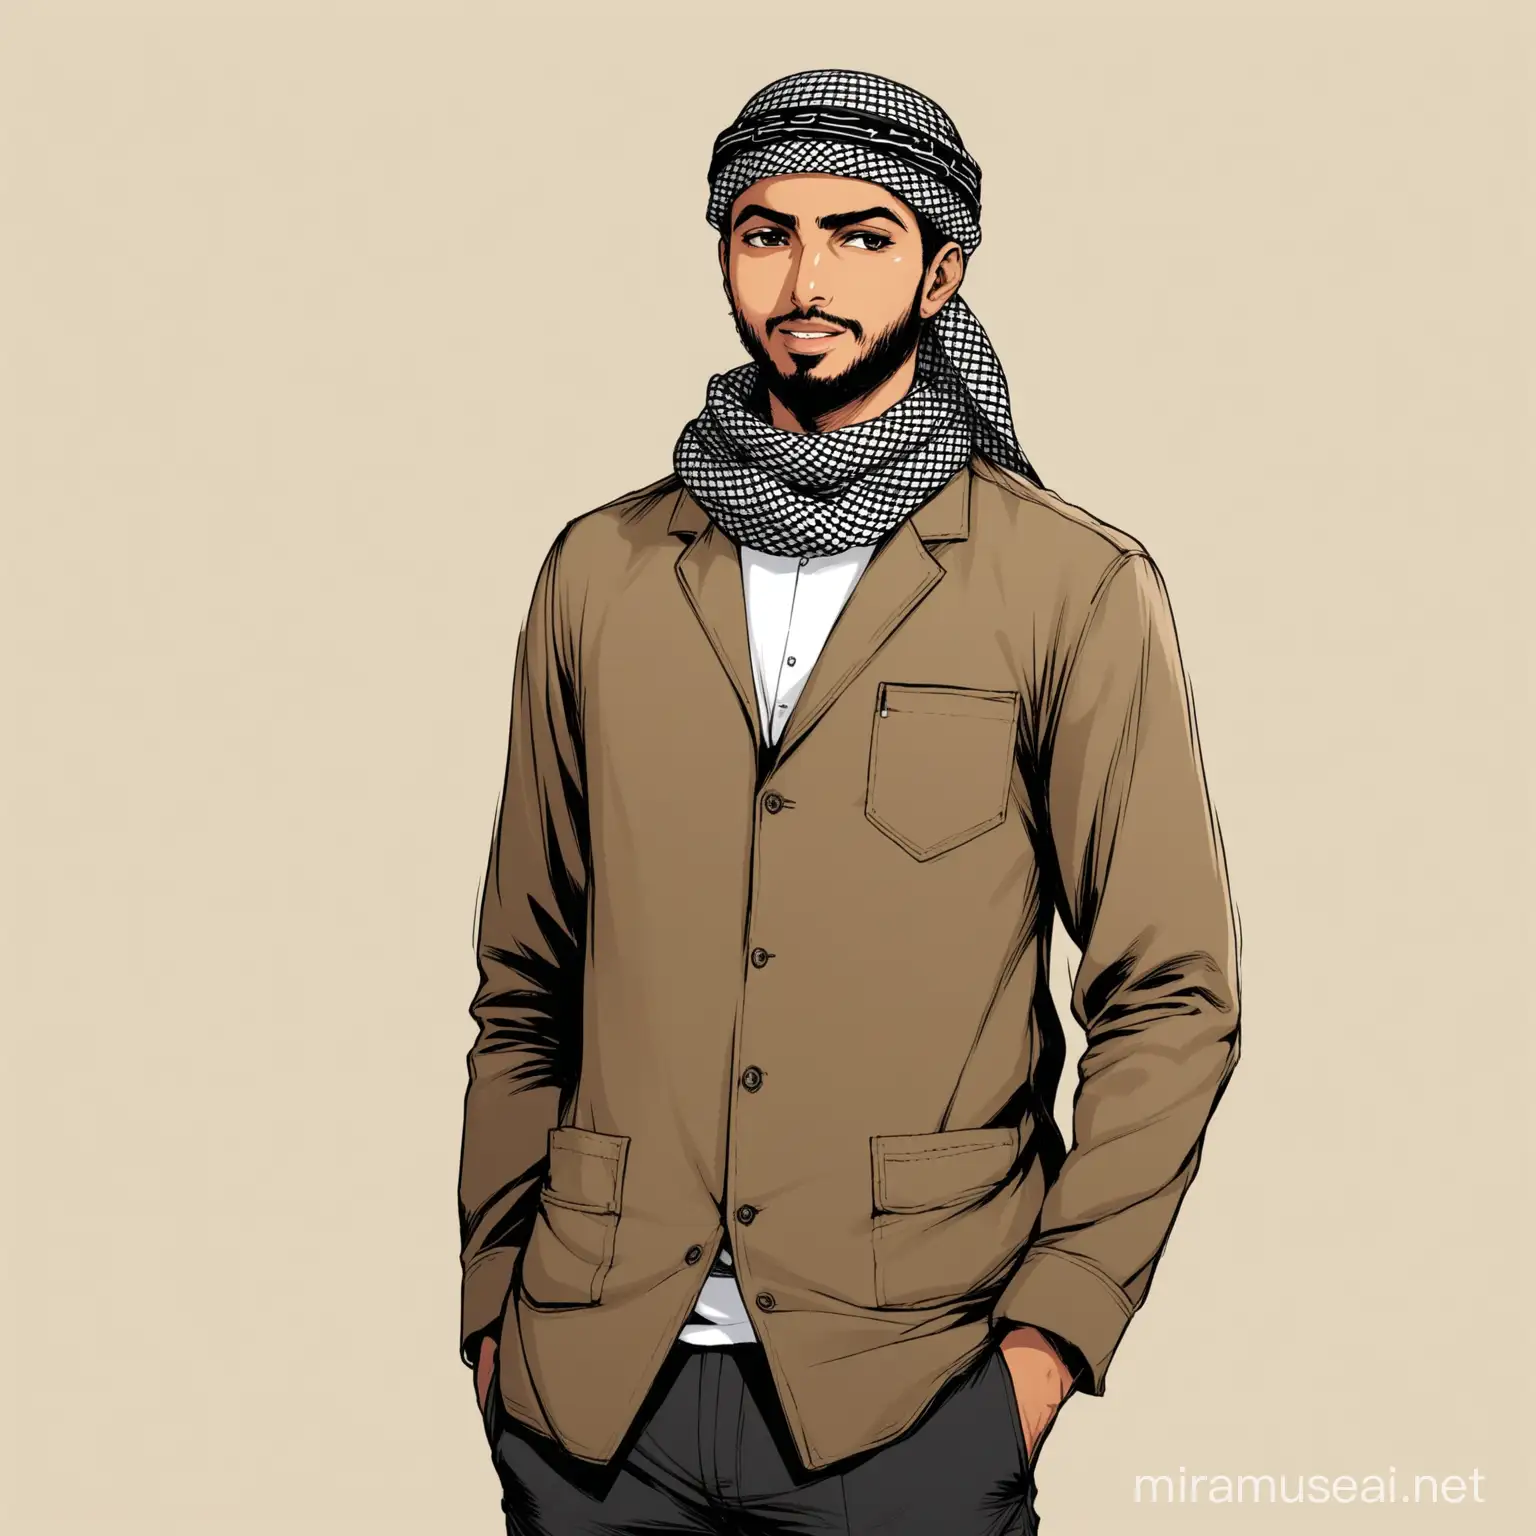 Stylish Muslim Man in Keffiyeh Gazing Right with Hands in Pocket